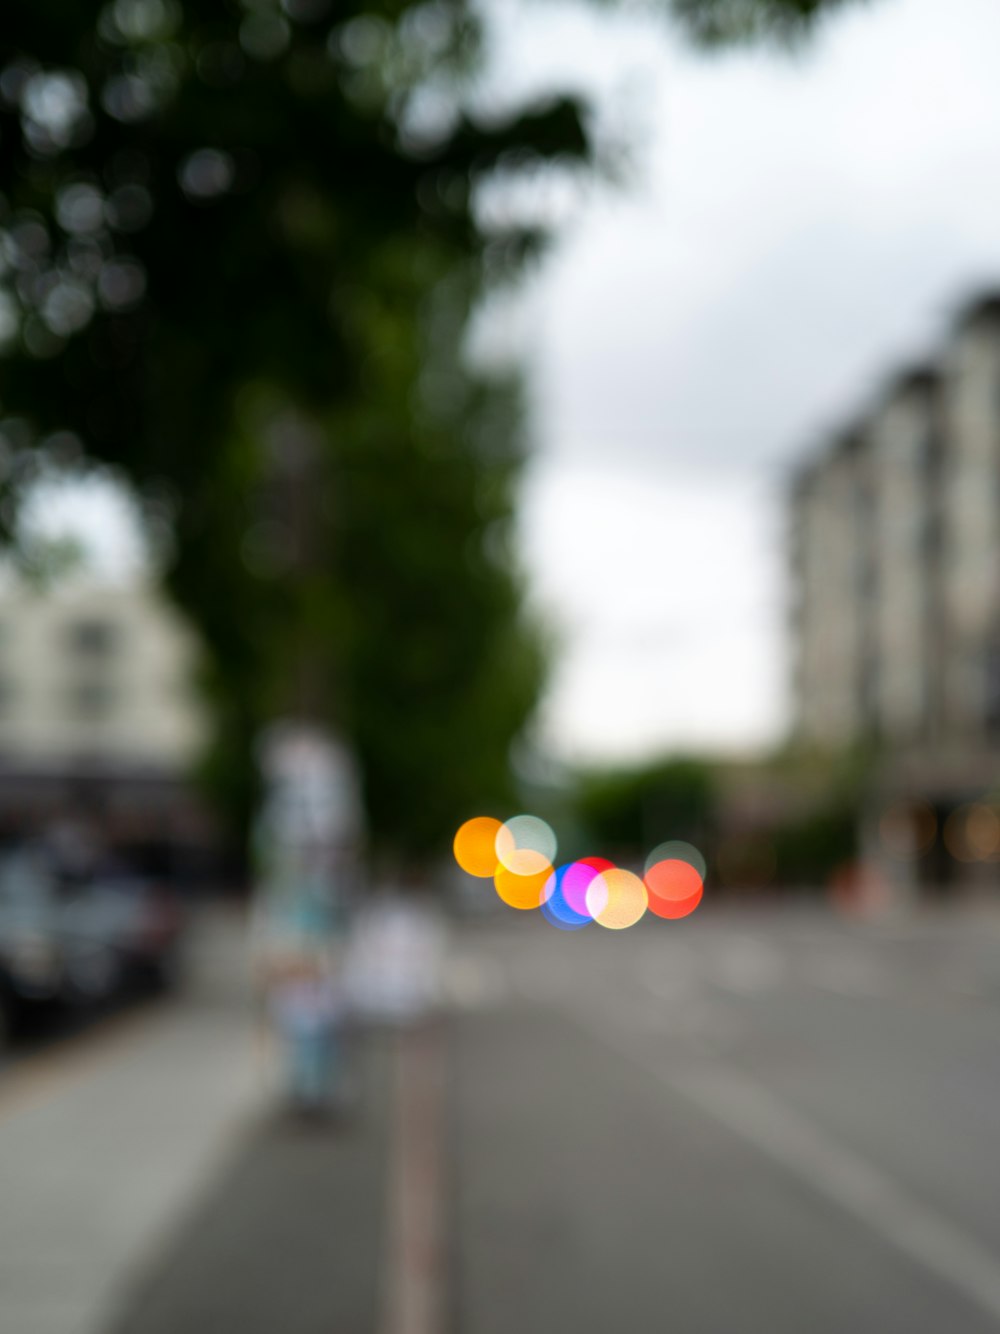 a blurry photo of a city street